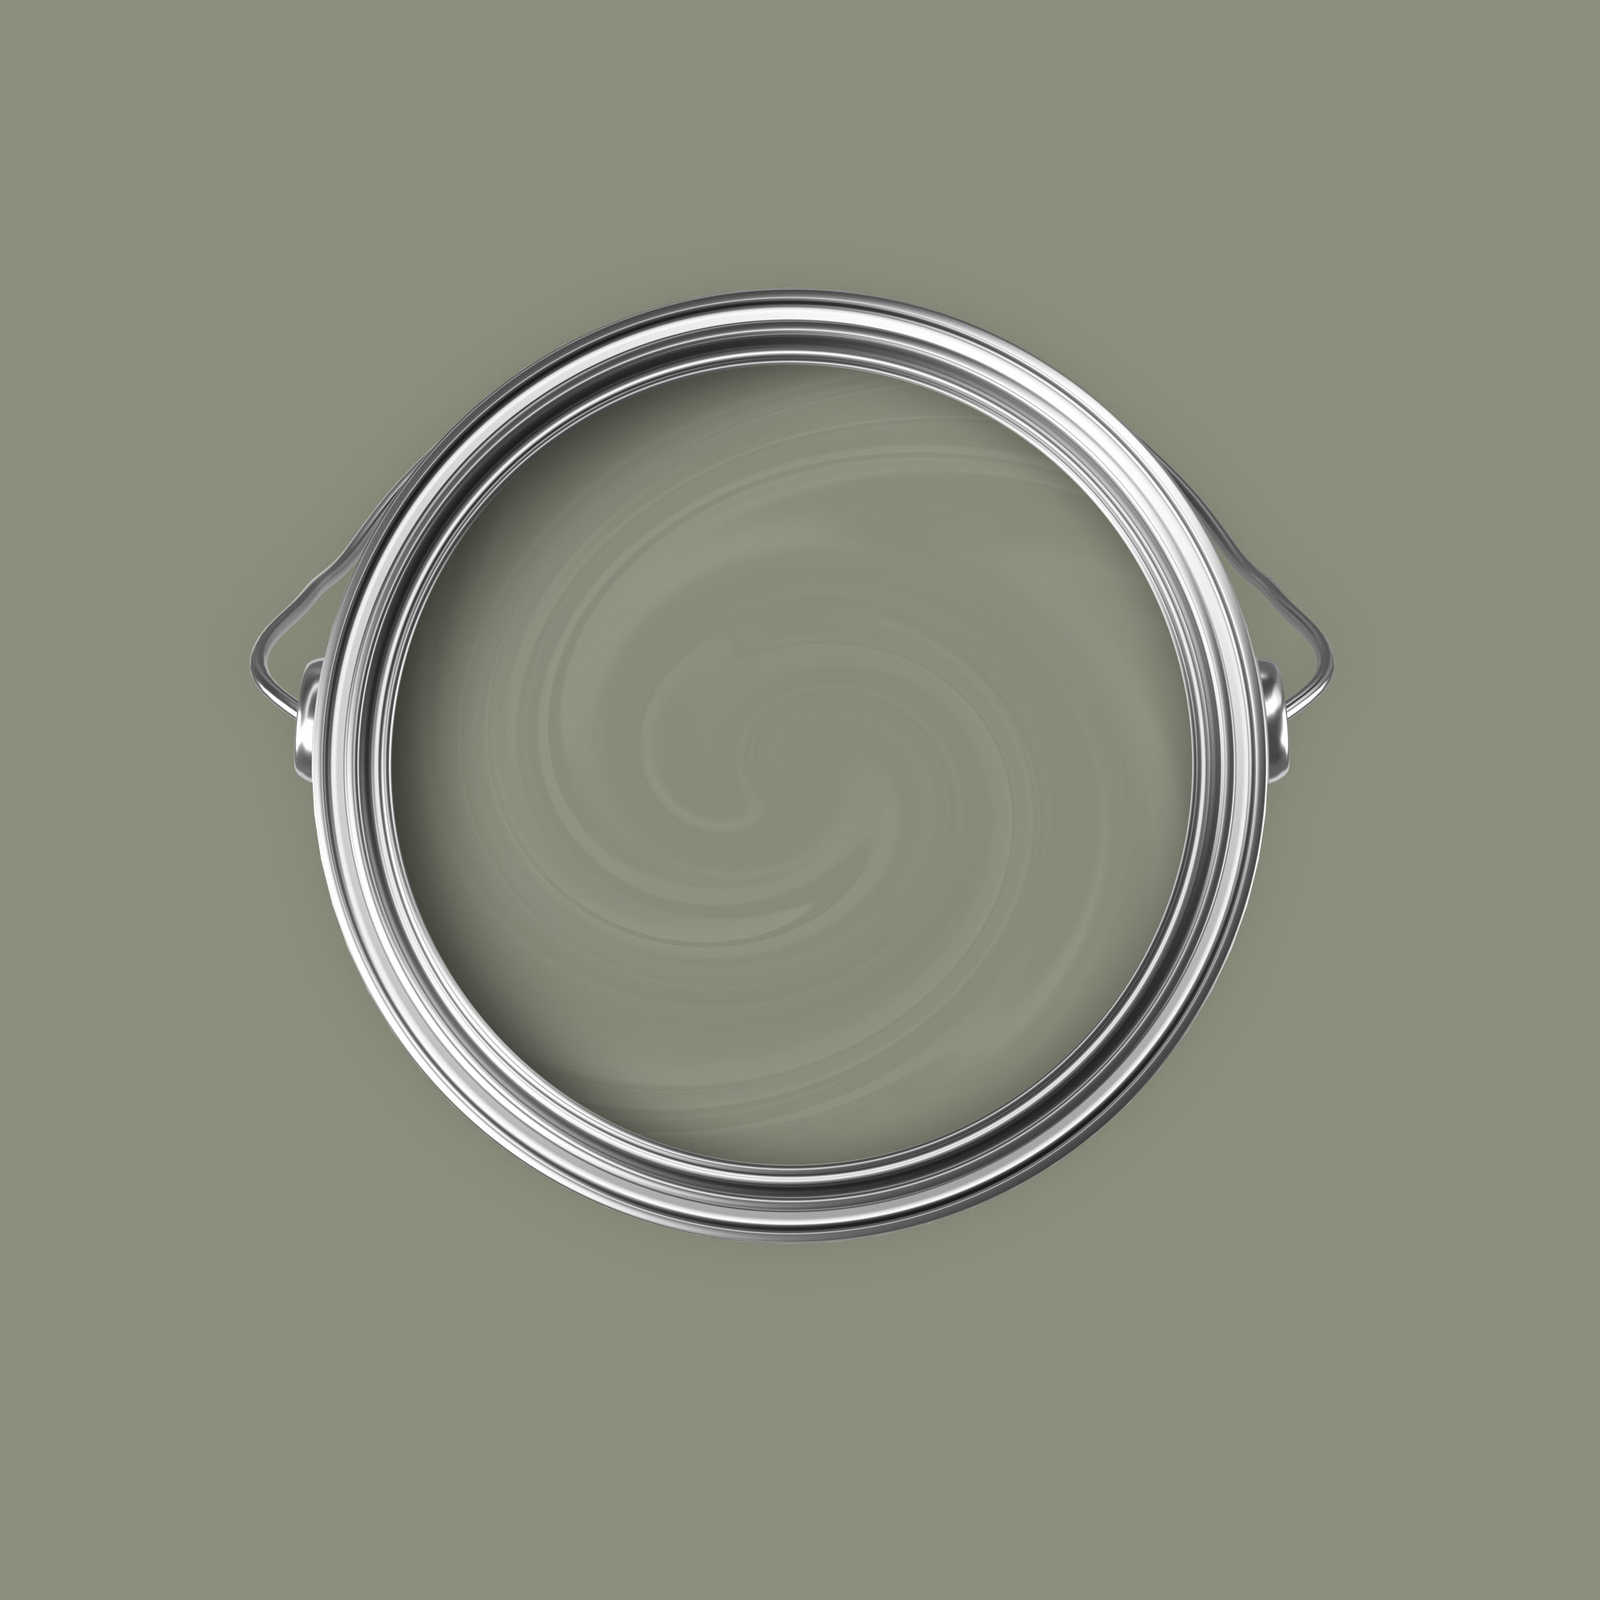             Premium Wandfarbe überzeugendes Olivgrün »Talented calm taupe« NW706 – 5 Liter
        